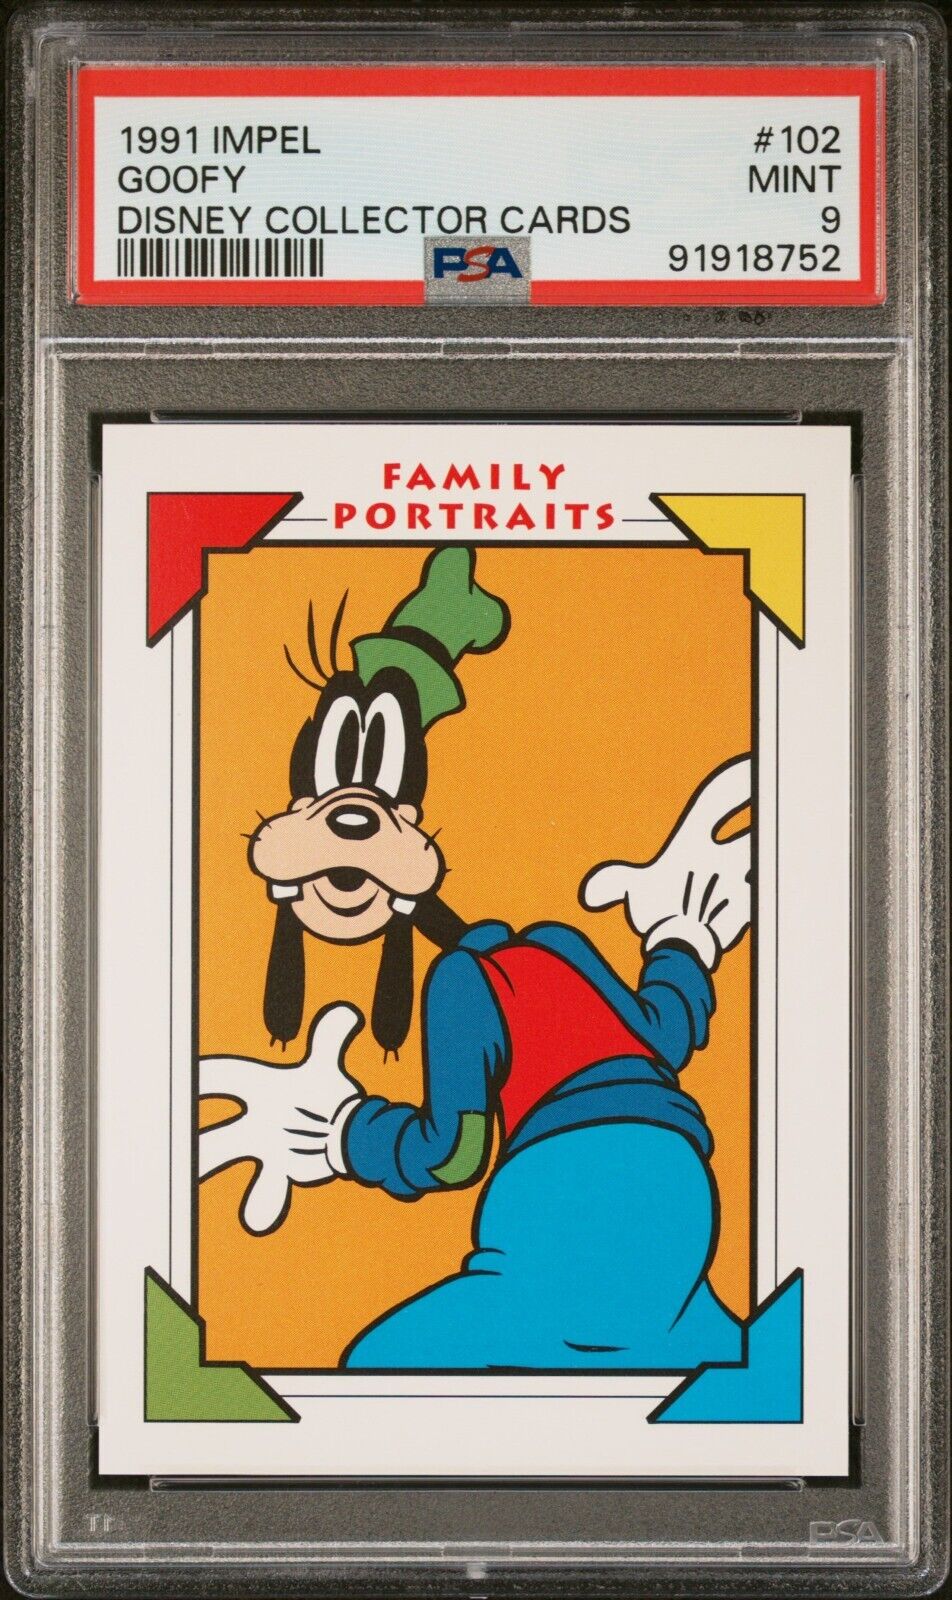 PSA 9 Mint 1991 Impel Disney Collector Cards Family Portraits #102 Goofy